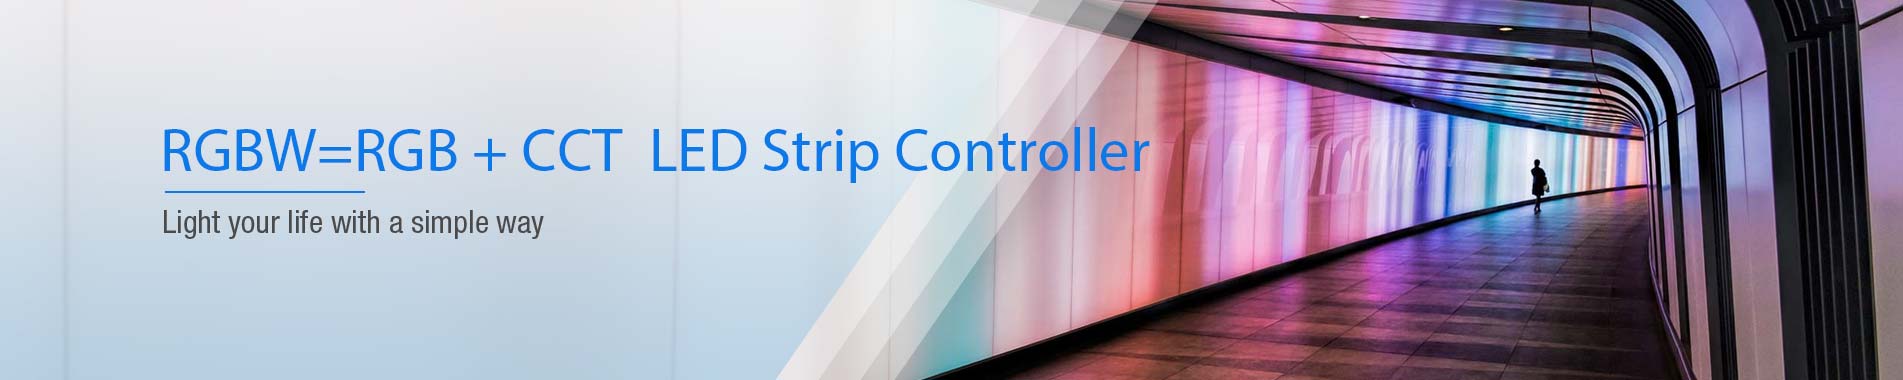 rgbw led strip controller